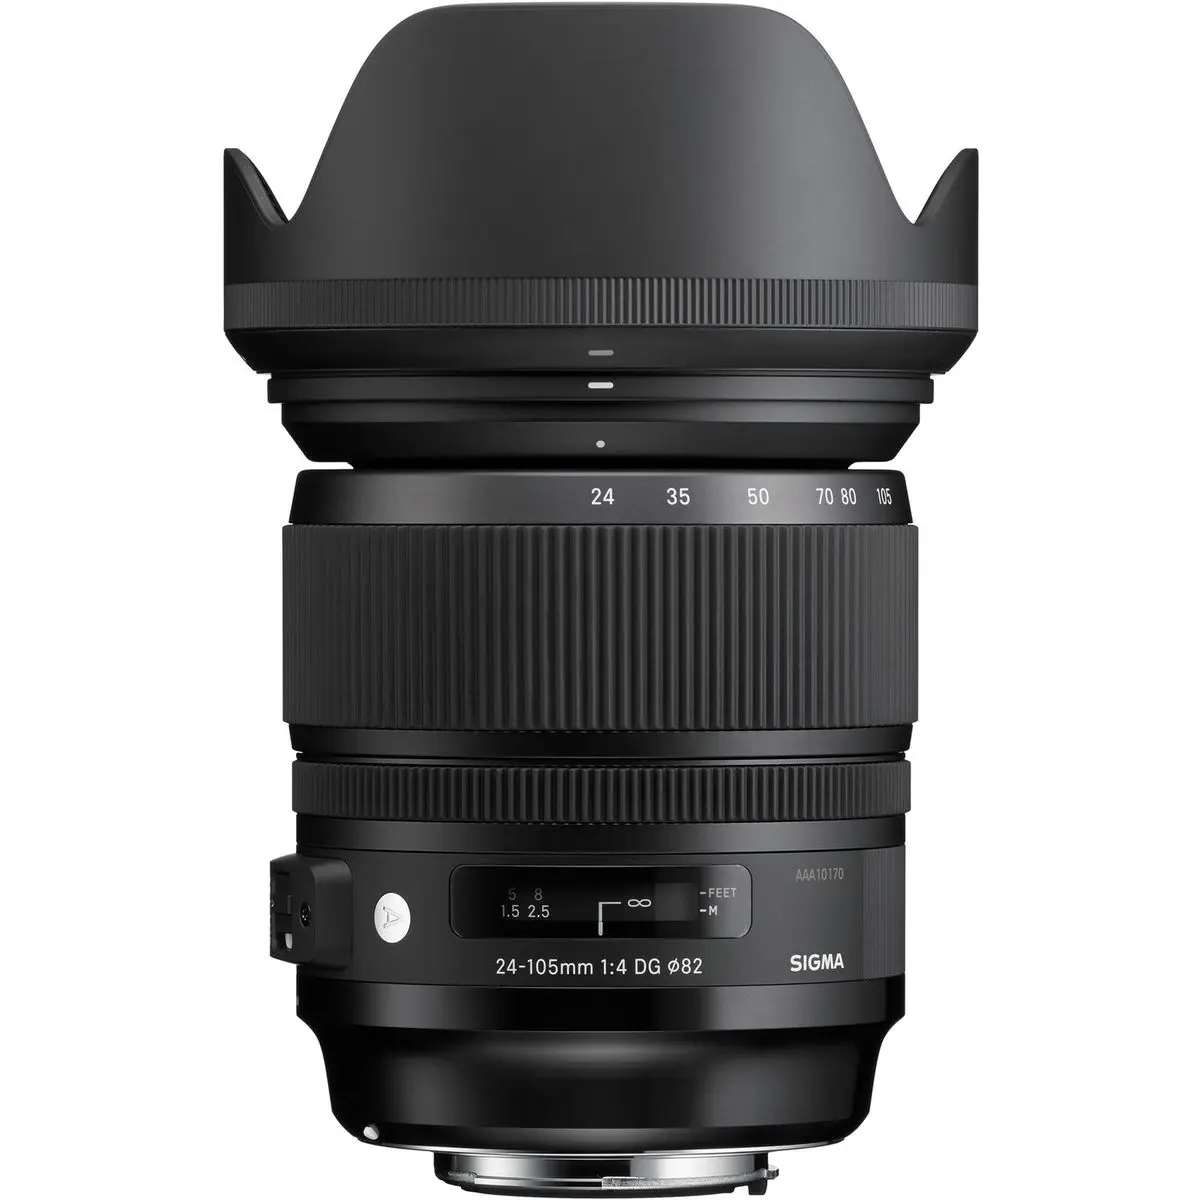 Sigma 24-105mm f/4 DG OS HSM Art (Canon) Lens